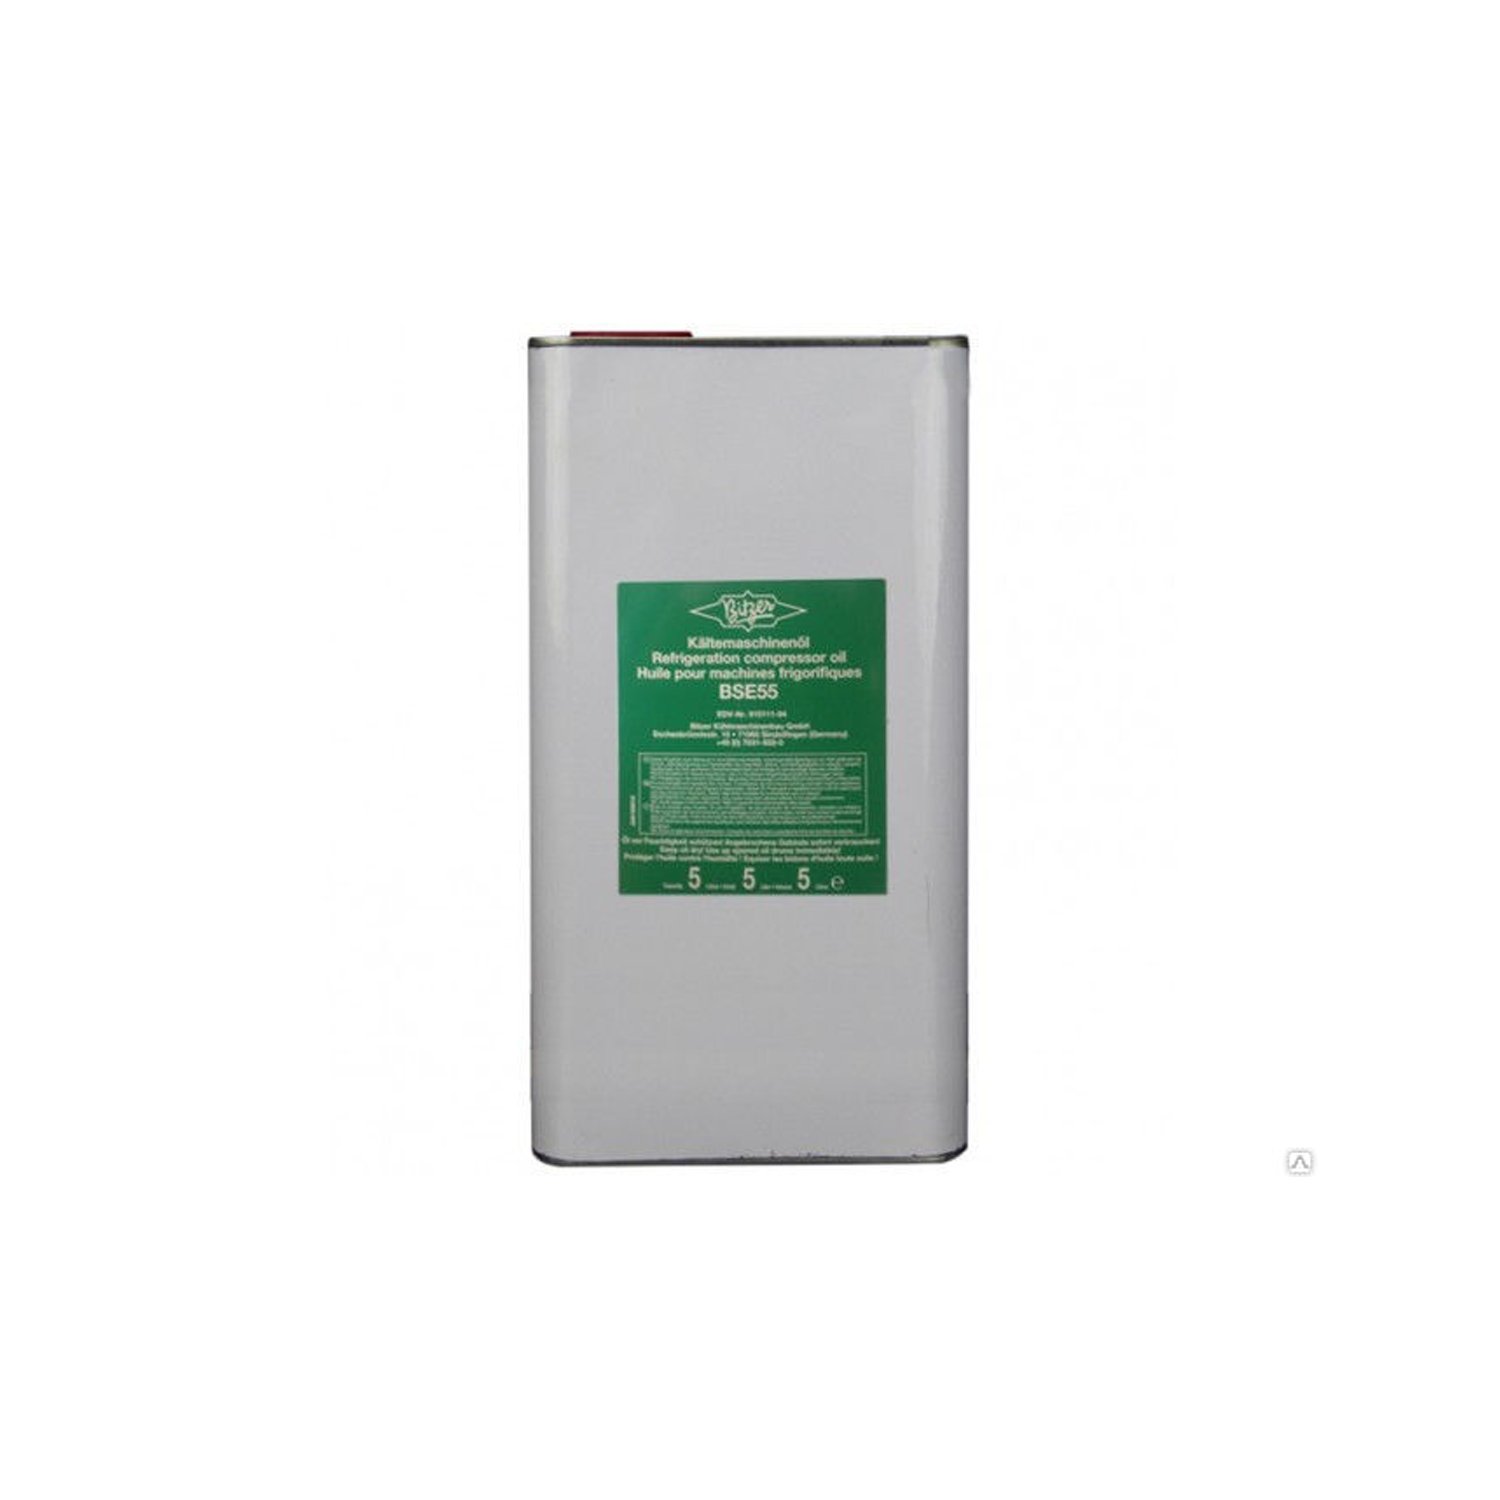 Bitzer esterolie BSE55, fles 5 liter, 91511104